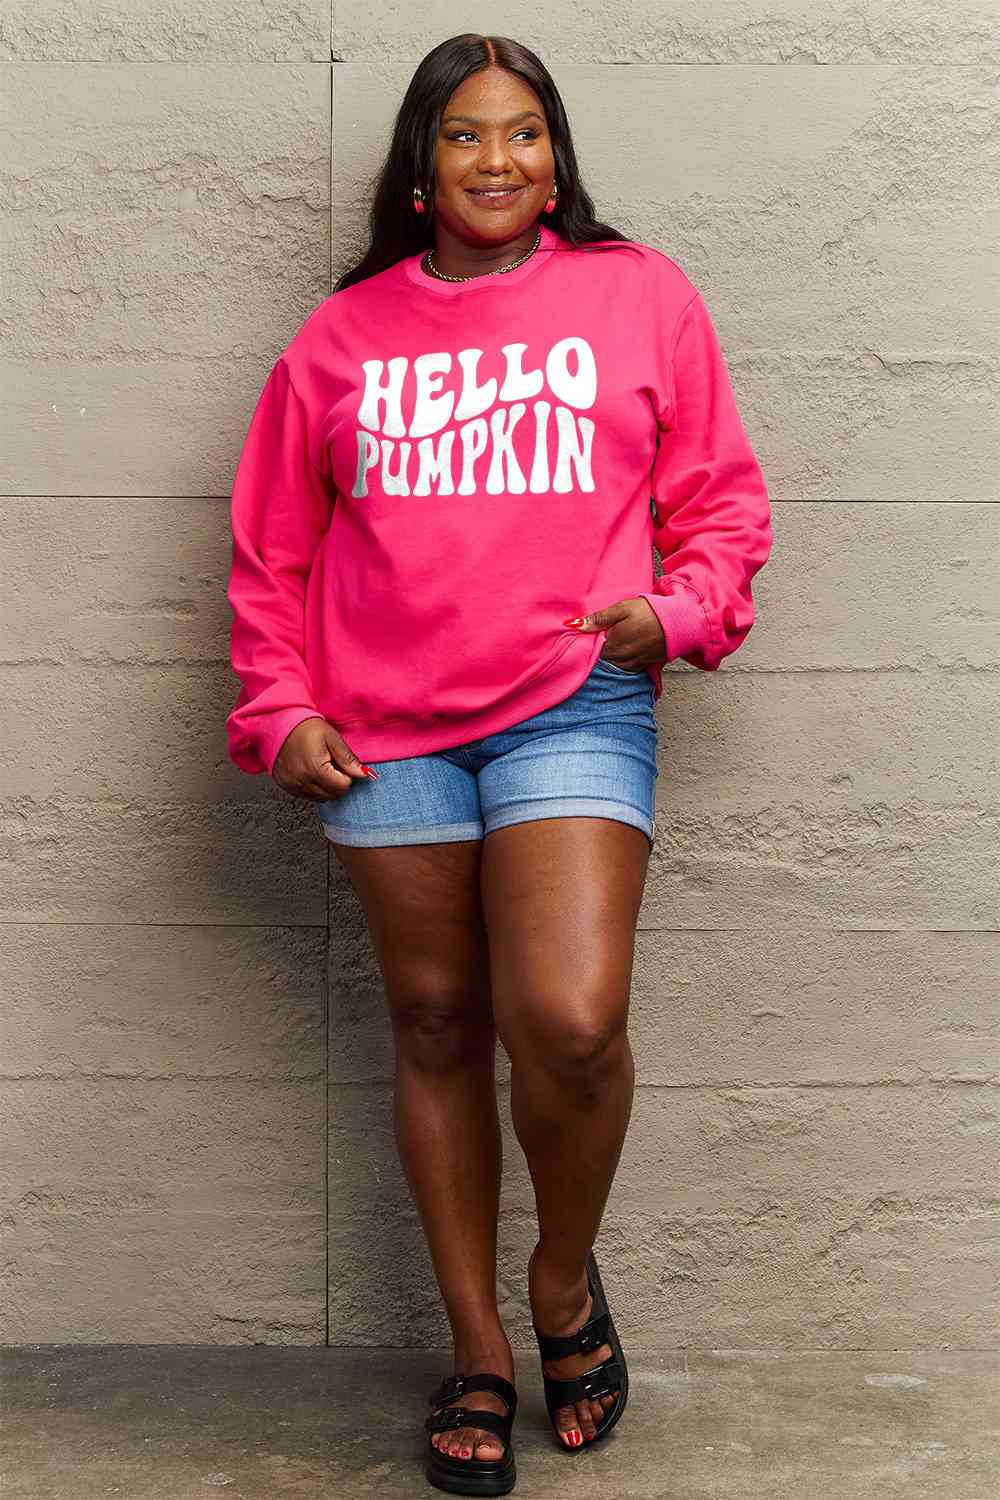 Simply Love Full Size HELLO PUMPKIN Graphic Sweatshirt